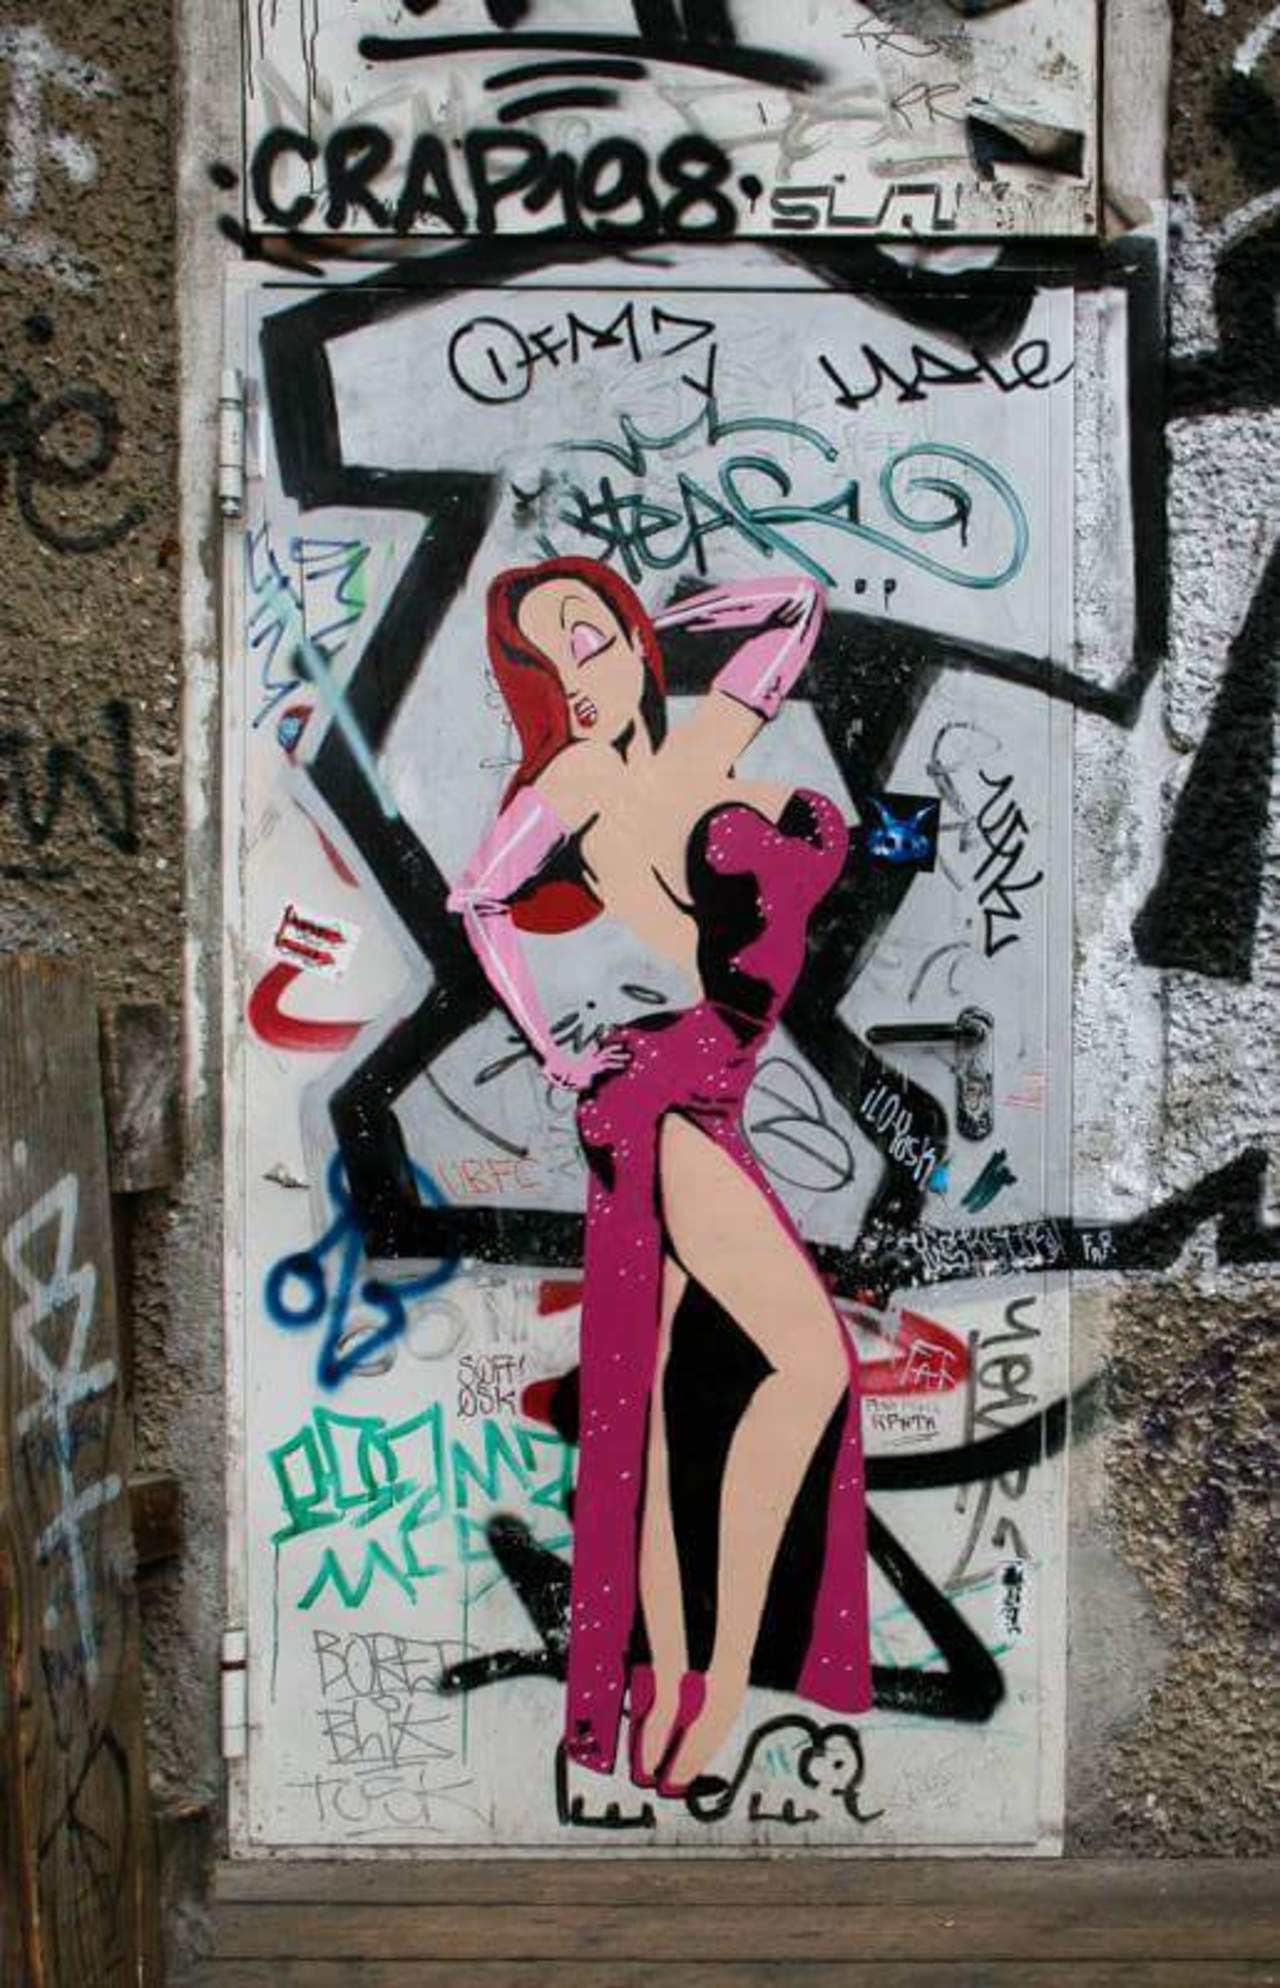 RT @GuilleMGreco: Pegasus Street Artists.
Berlin.
#Art #Graffiti #StreetArt #UrbanArt http://t.co/SYEzHXsxR8